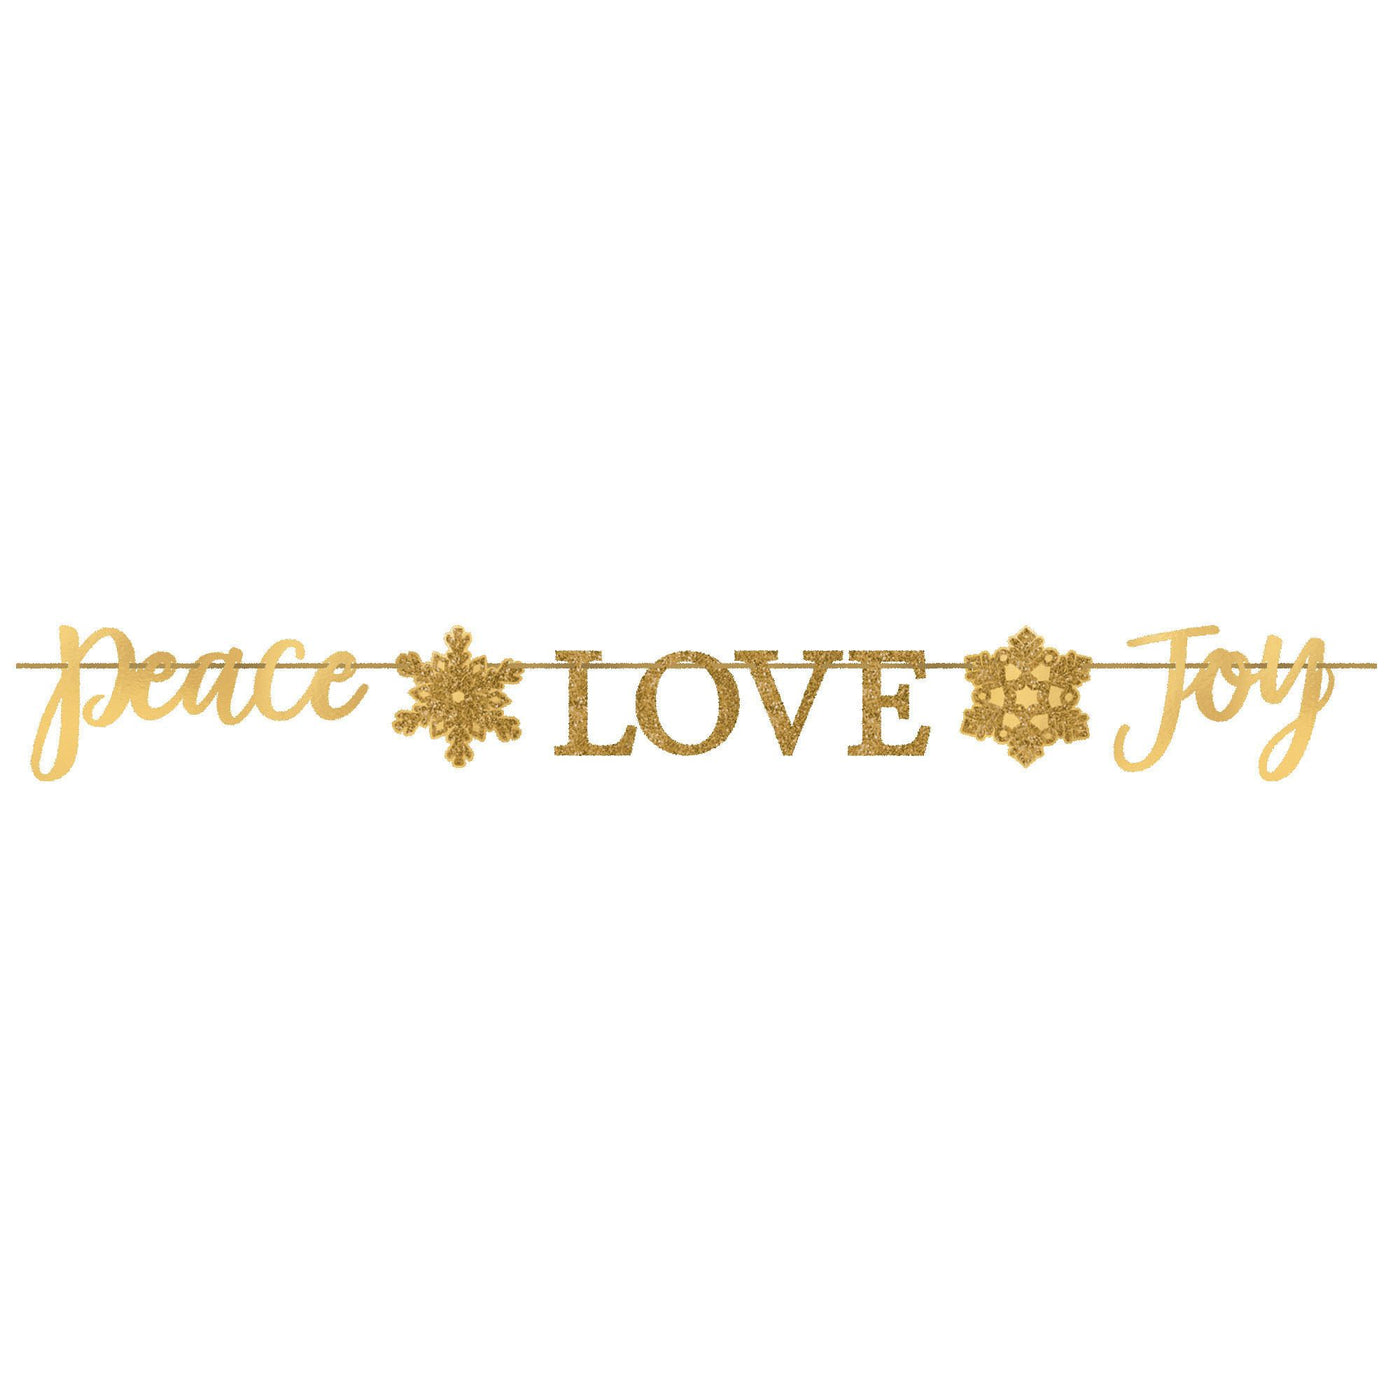 Peace Love Joy Banner - 12 foot long